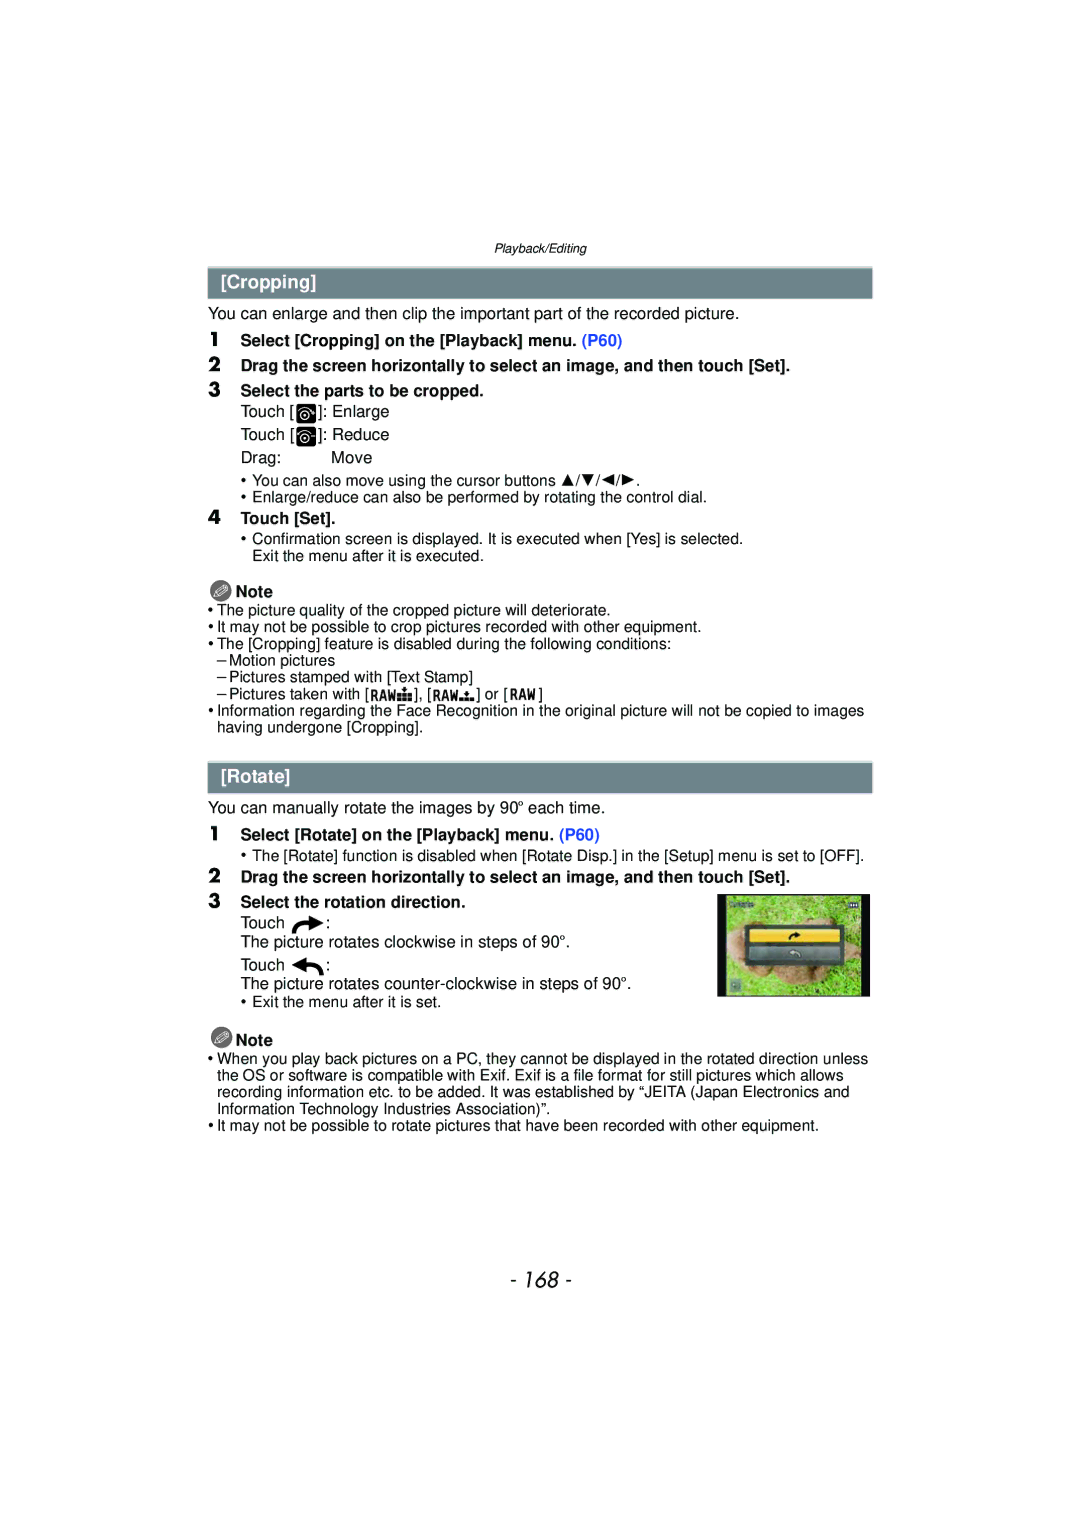 Panasonic DMC-GF5 owner manual 168, Cropping, Select Rotate on the Playback menu. P60 